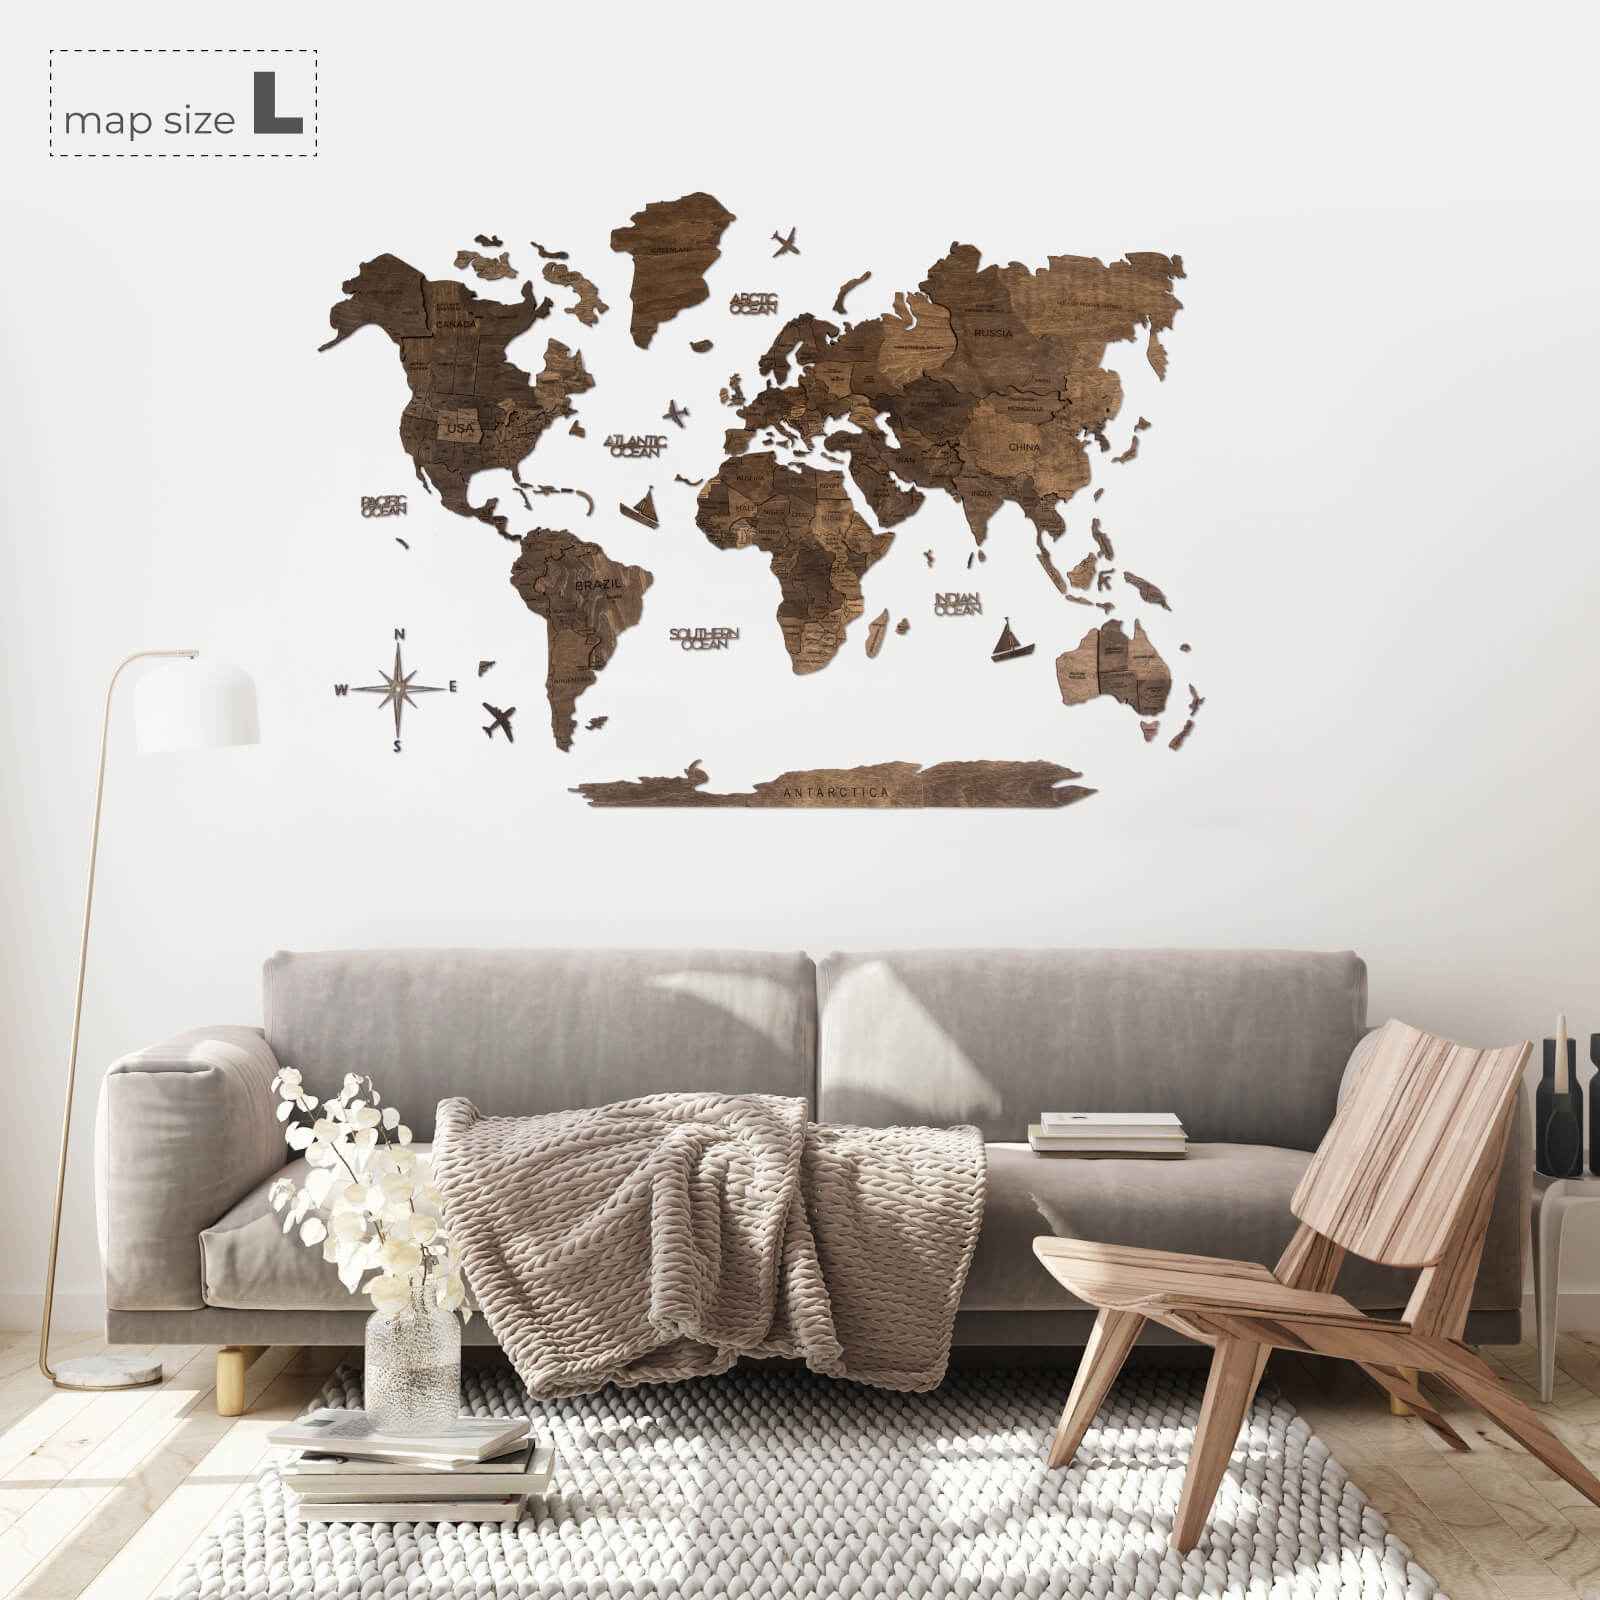 Wood Wall Art, World Map Push Pin, Wooden Wall Map, Home Wall Decor Bedroom